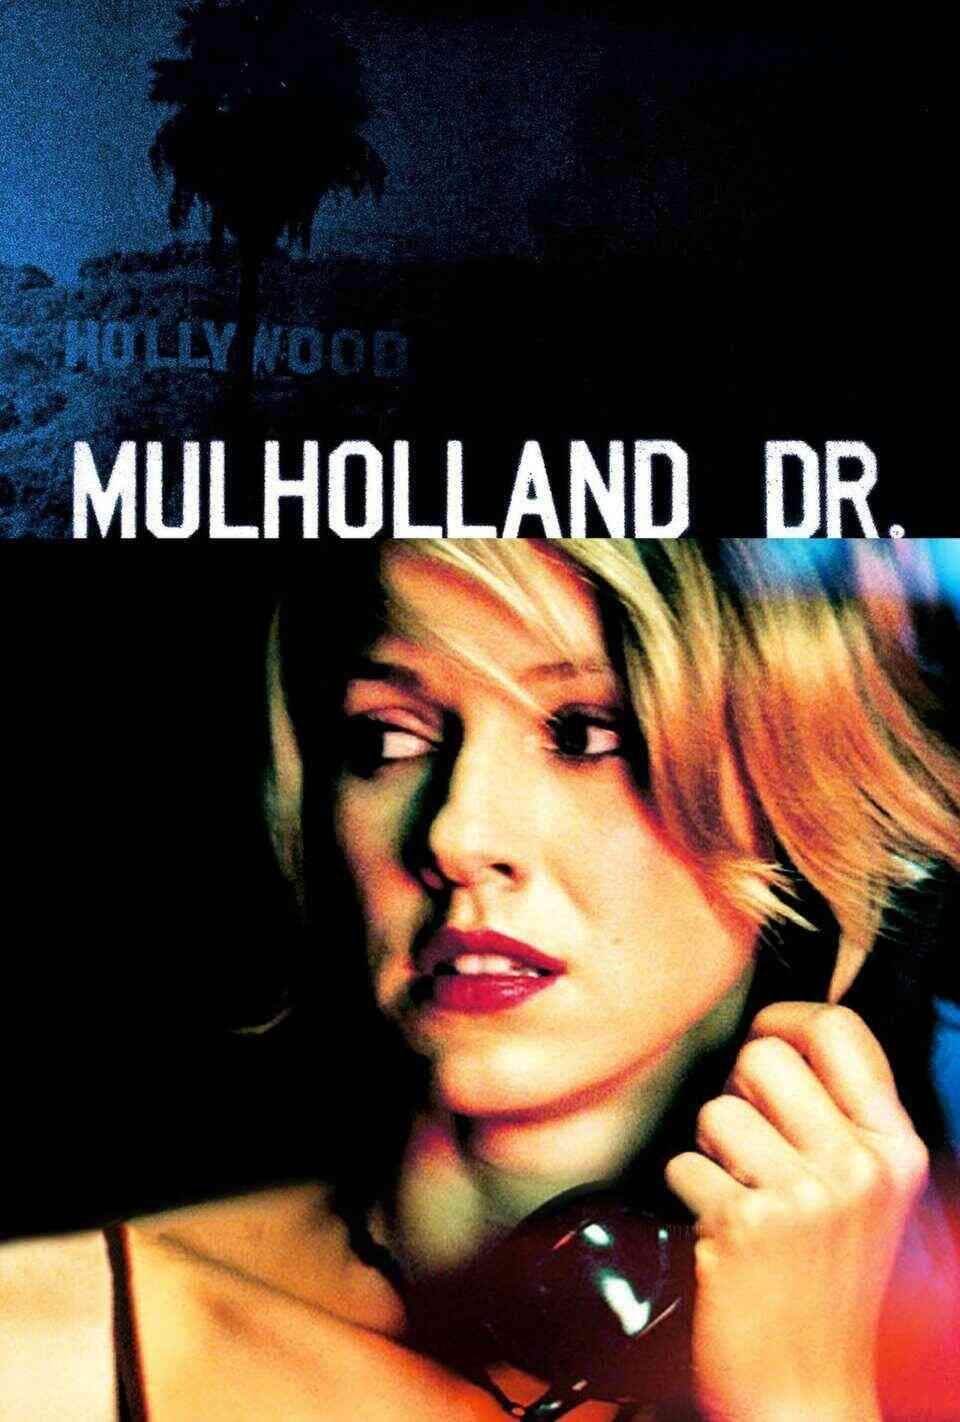 Read Mulholland Dr. screenplay.